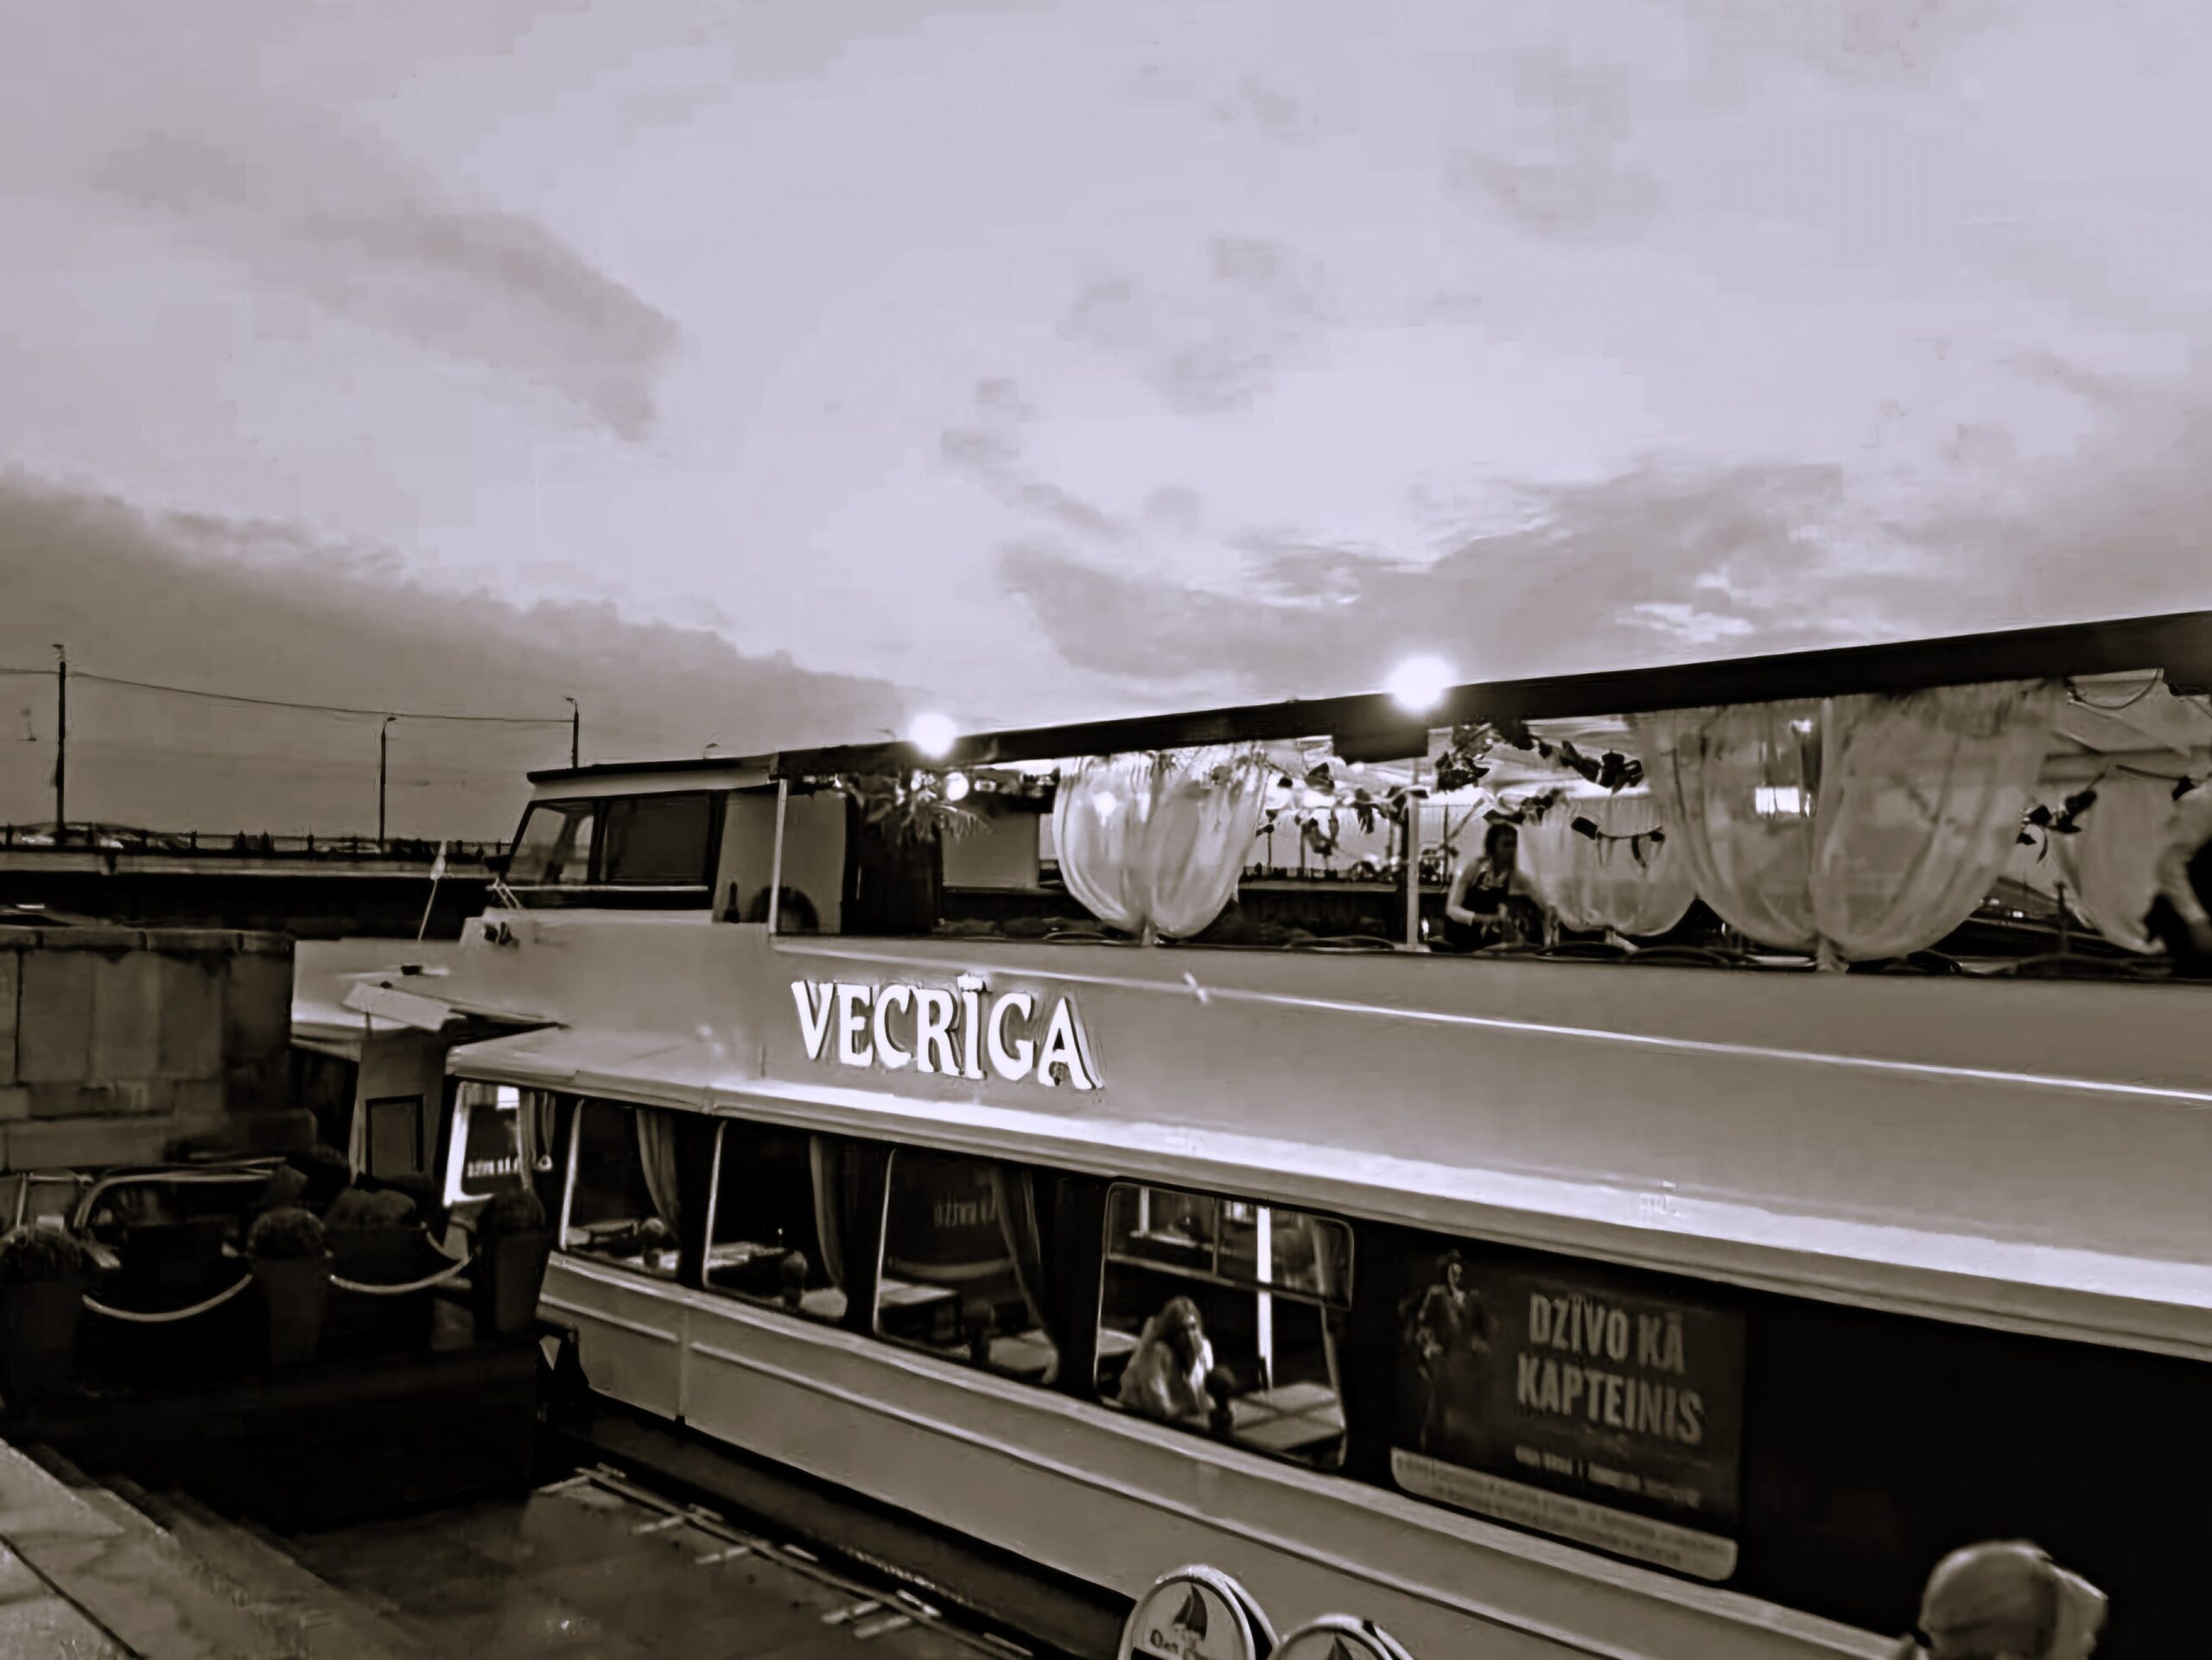 A black and white shot of the 'Vecriga' cruise ship in Riga, Latvia.